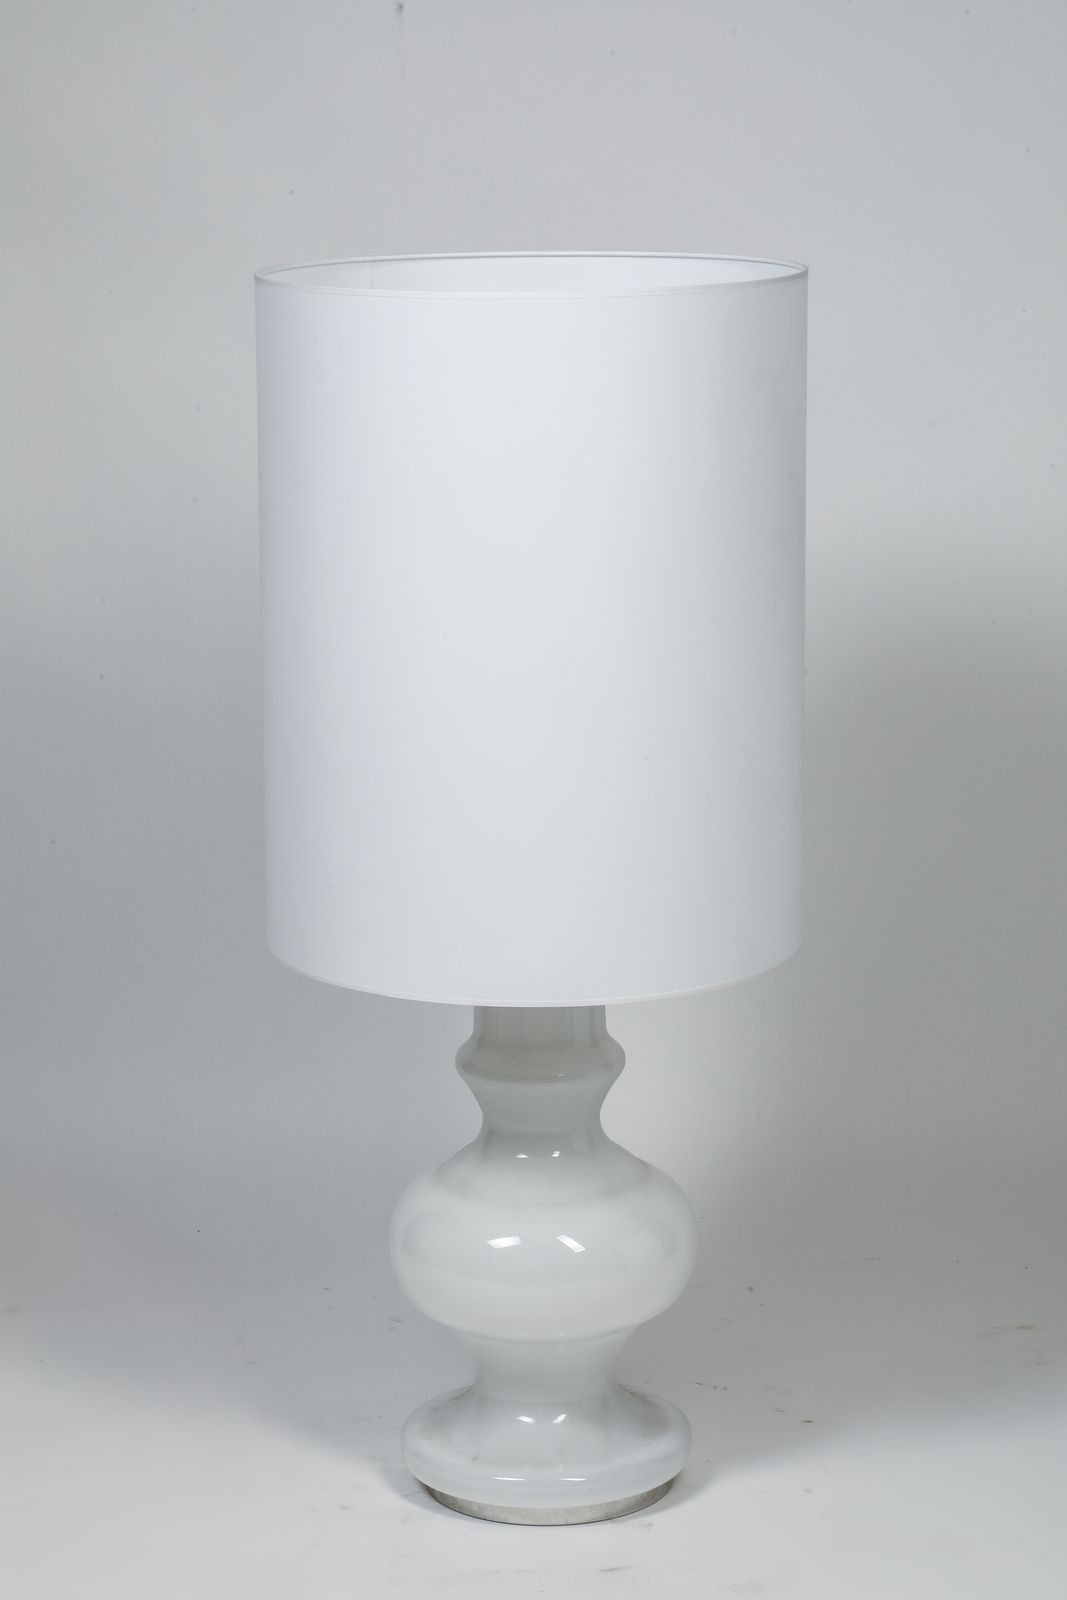 Null 大型穆拉诺玻璃灯



70年代的意大利作品



高：93厘米 直径：40厘米